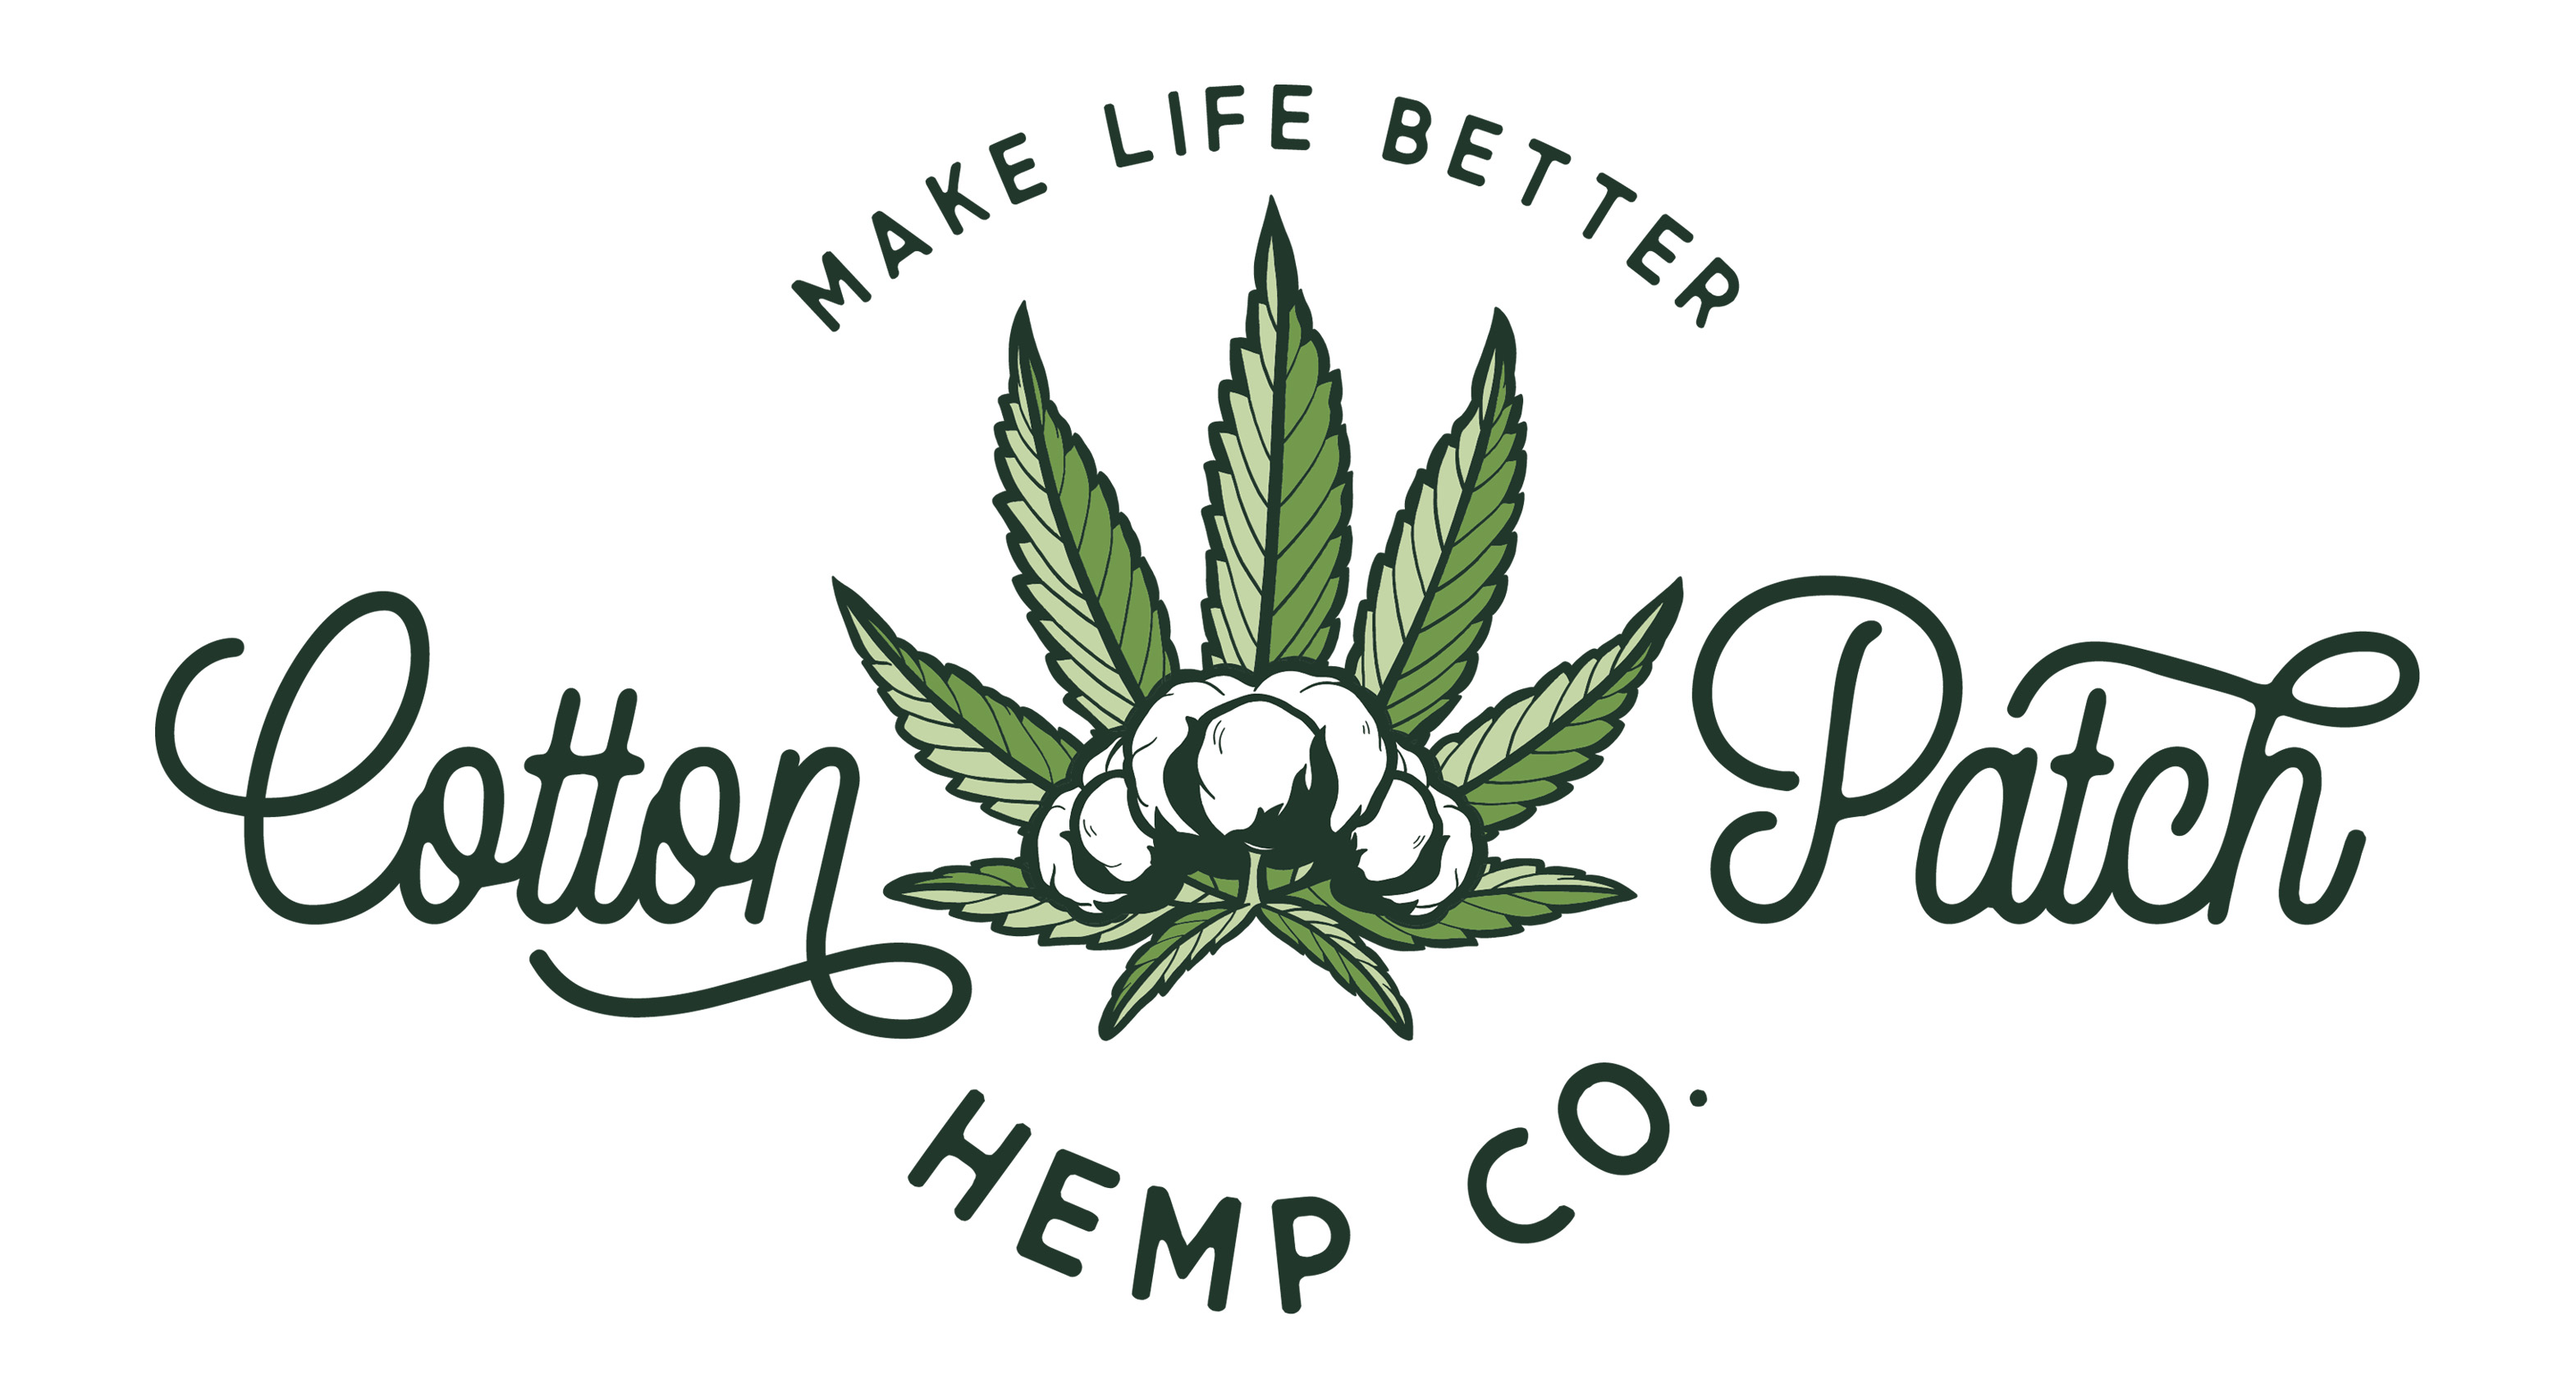 Make Life Better  Cotton Patch Hemp Co.